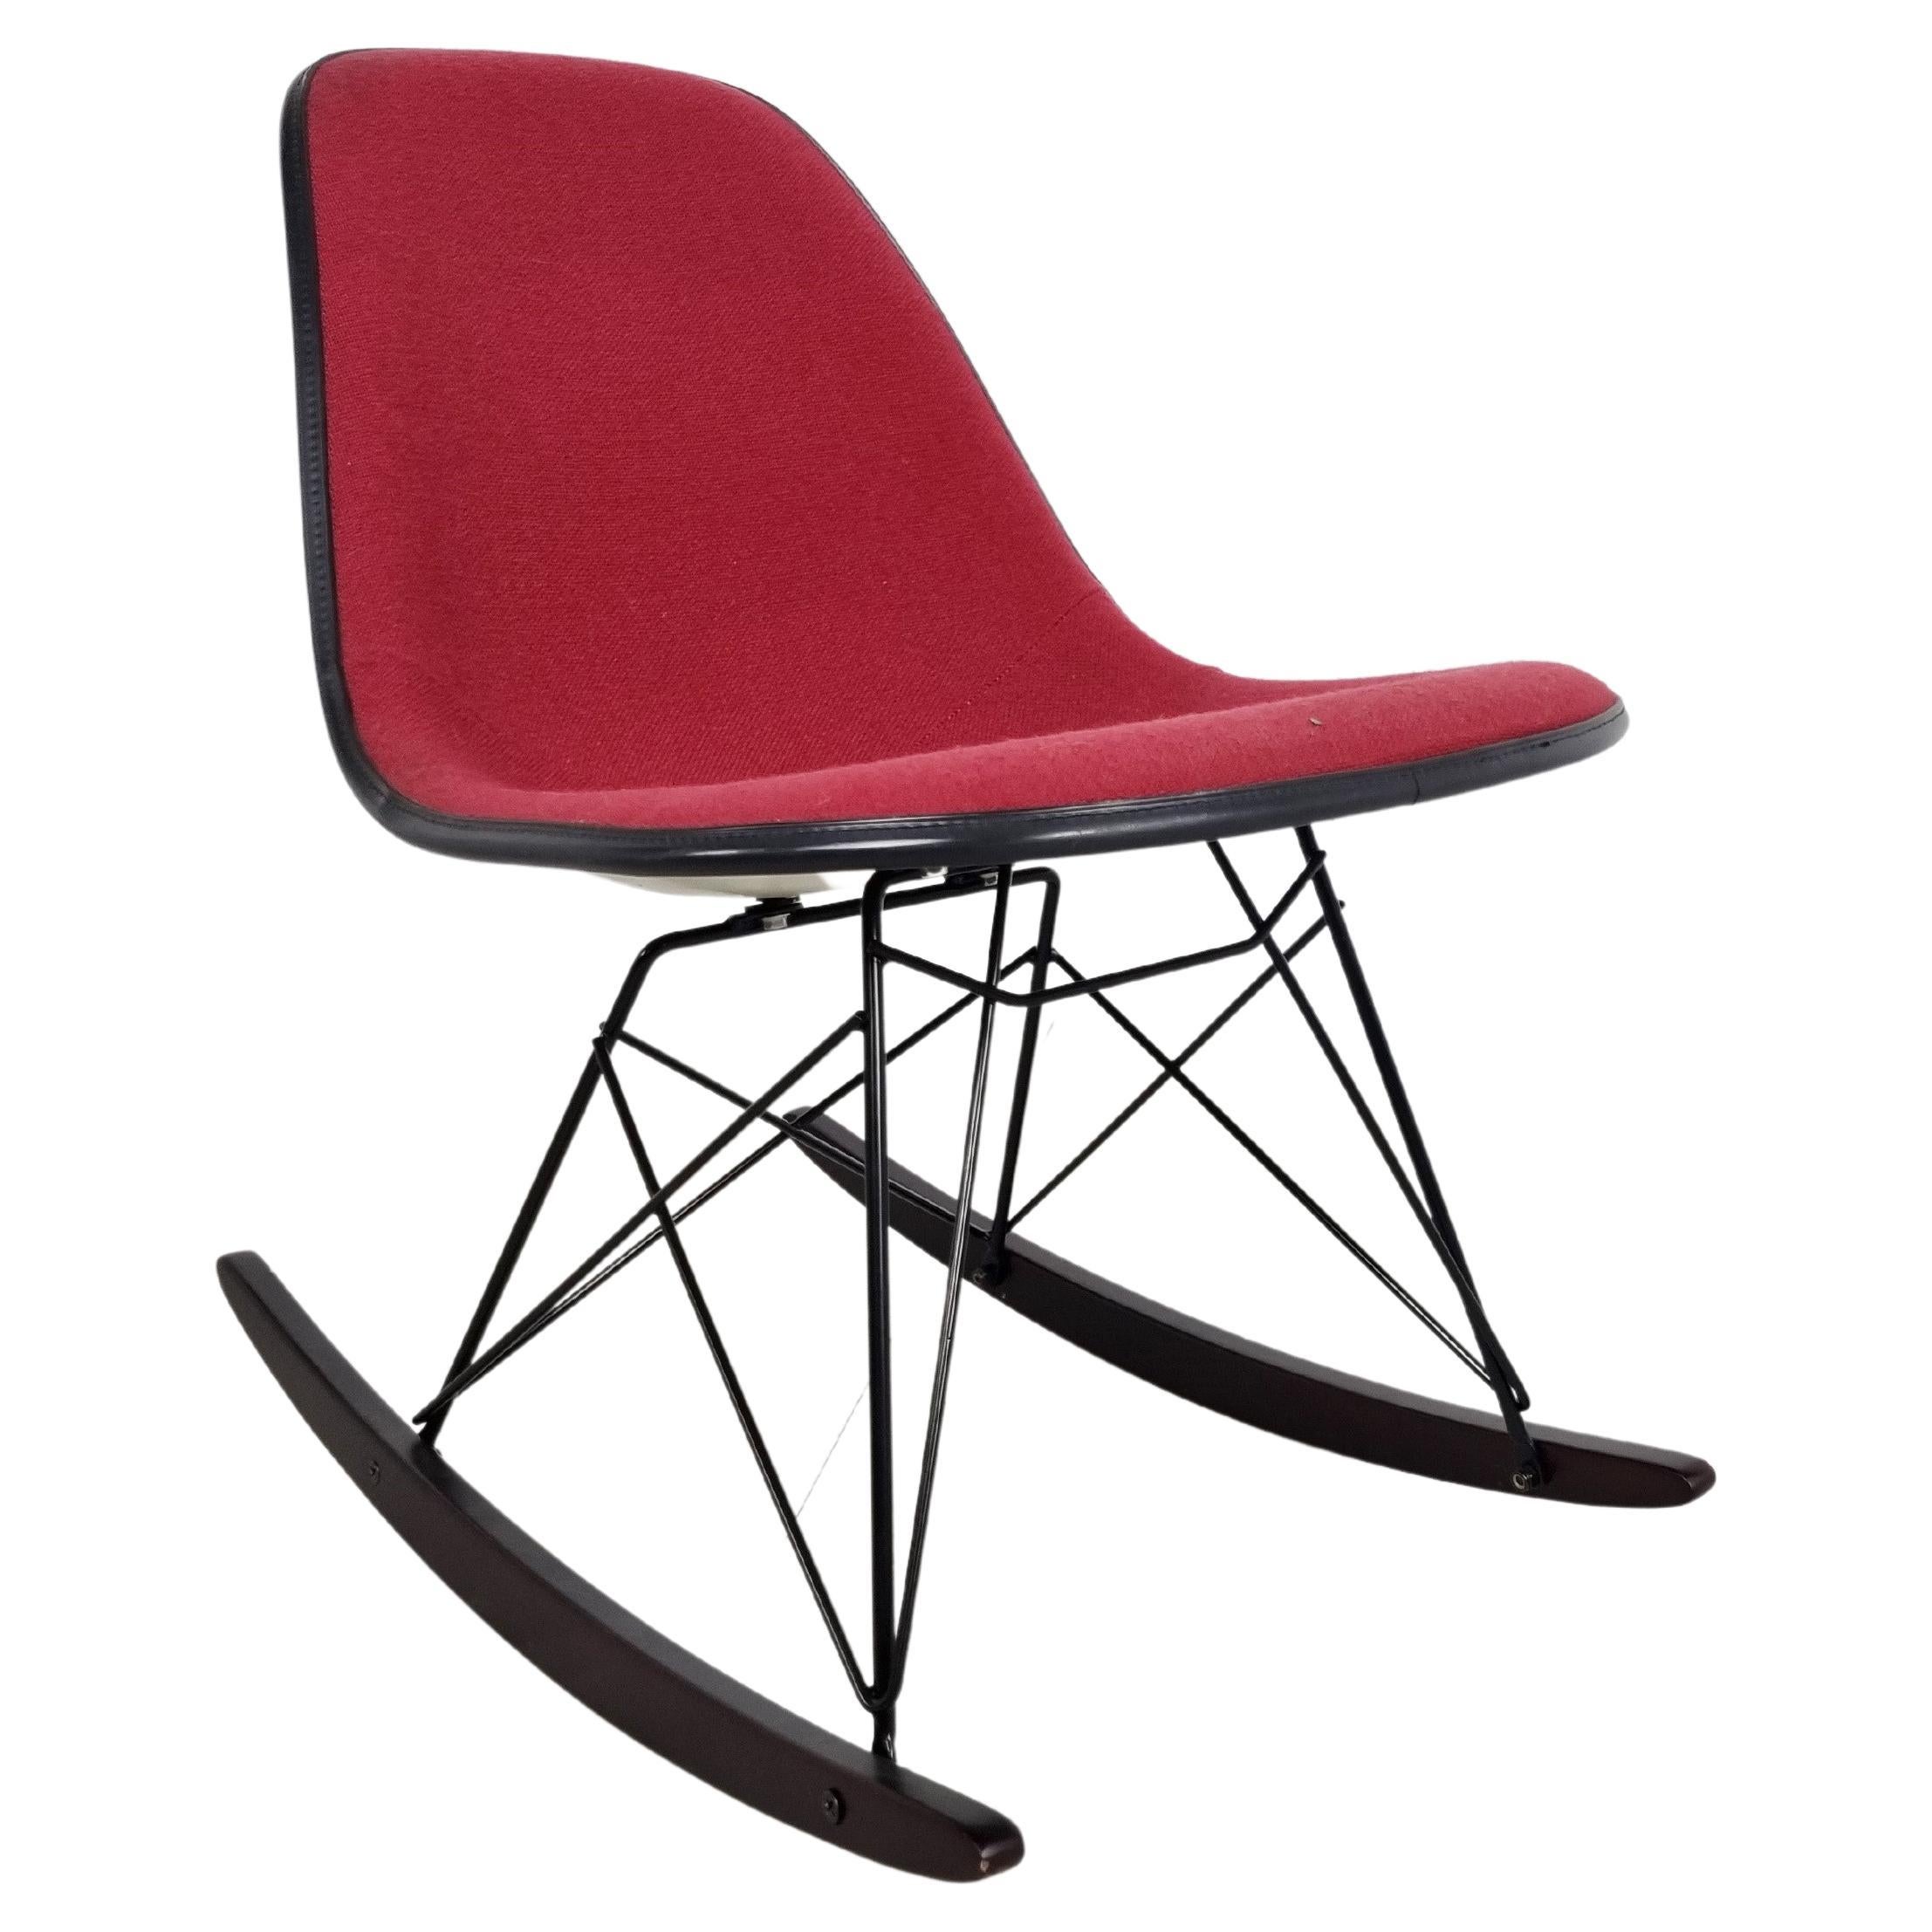 Herman Miller 1970s Chair - 35 For Sale on 1stDibs